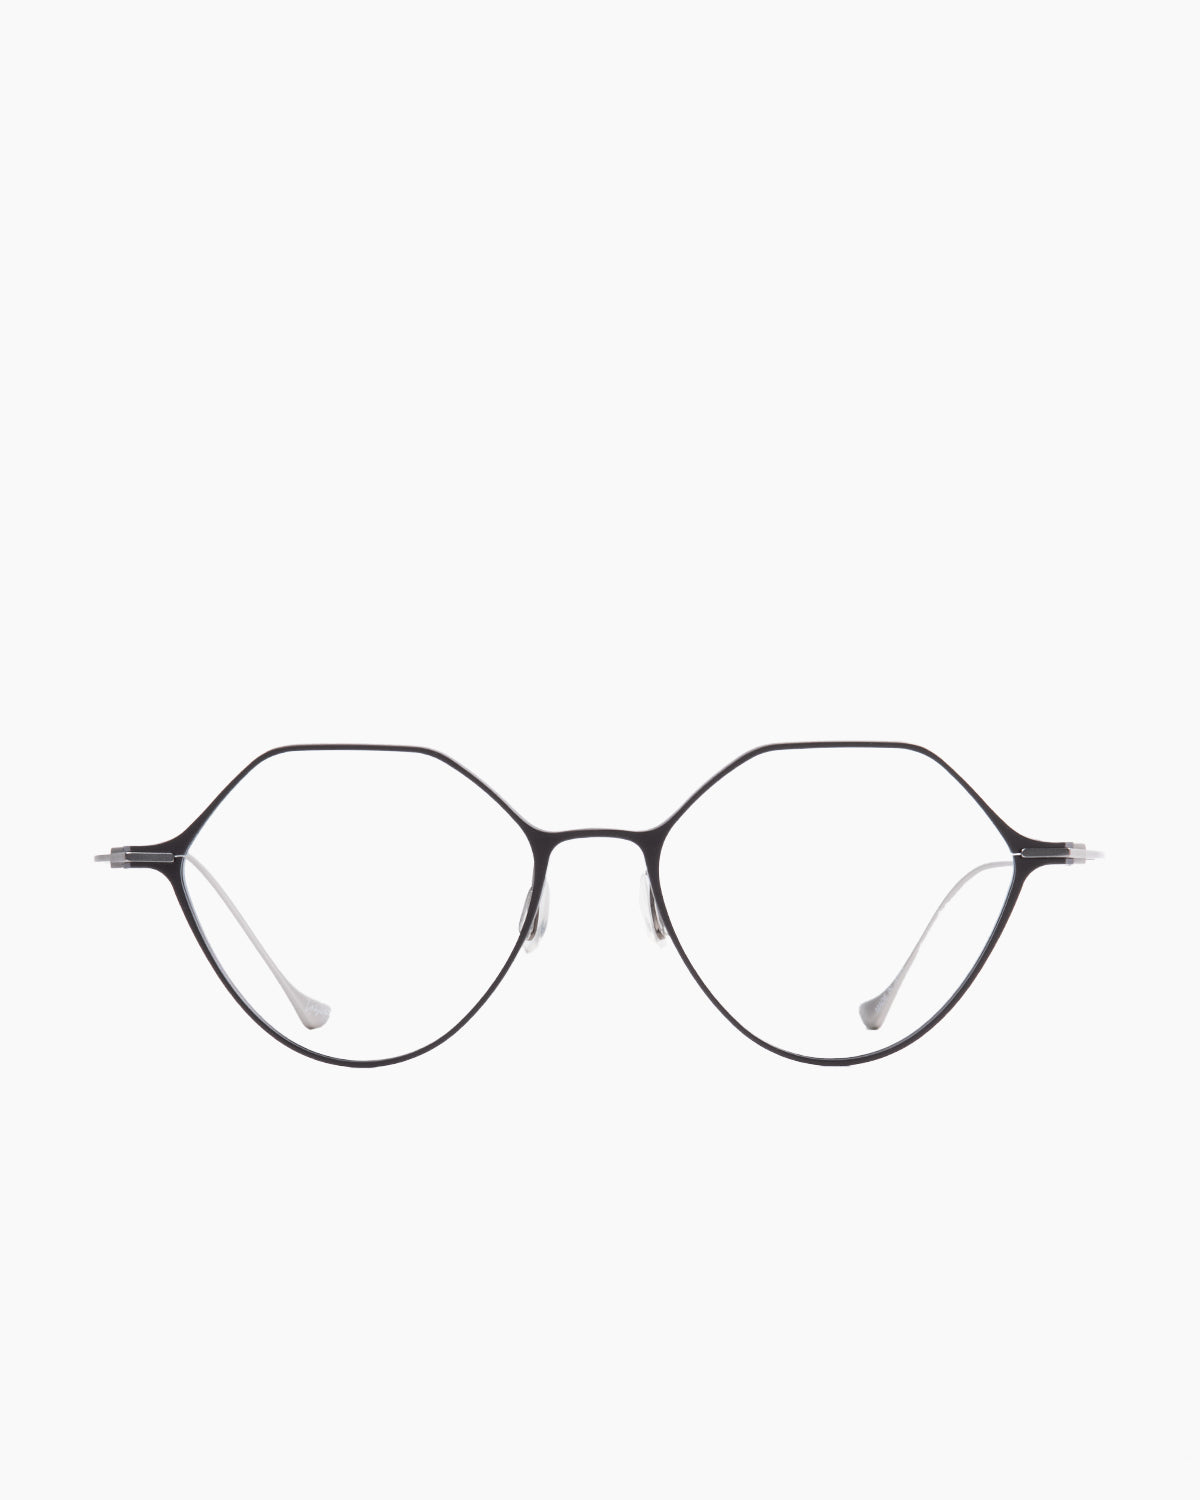 Yohji Yamamoto - 3021 - 908 | glasses bar:  Marie-Sophie Dion